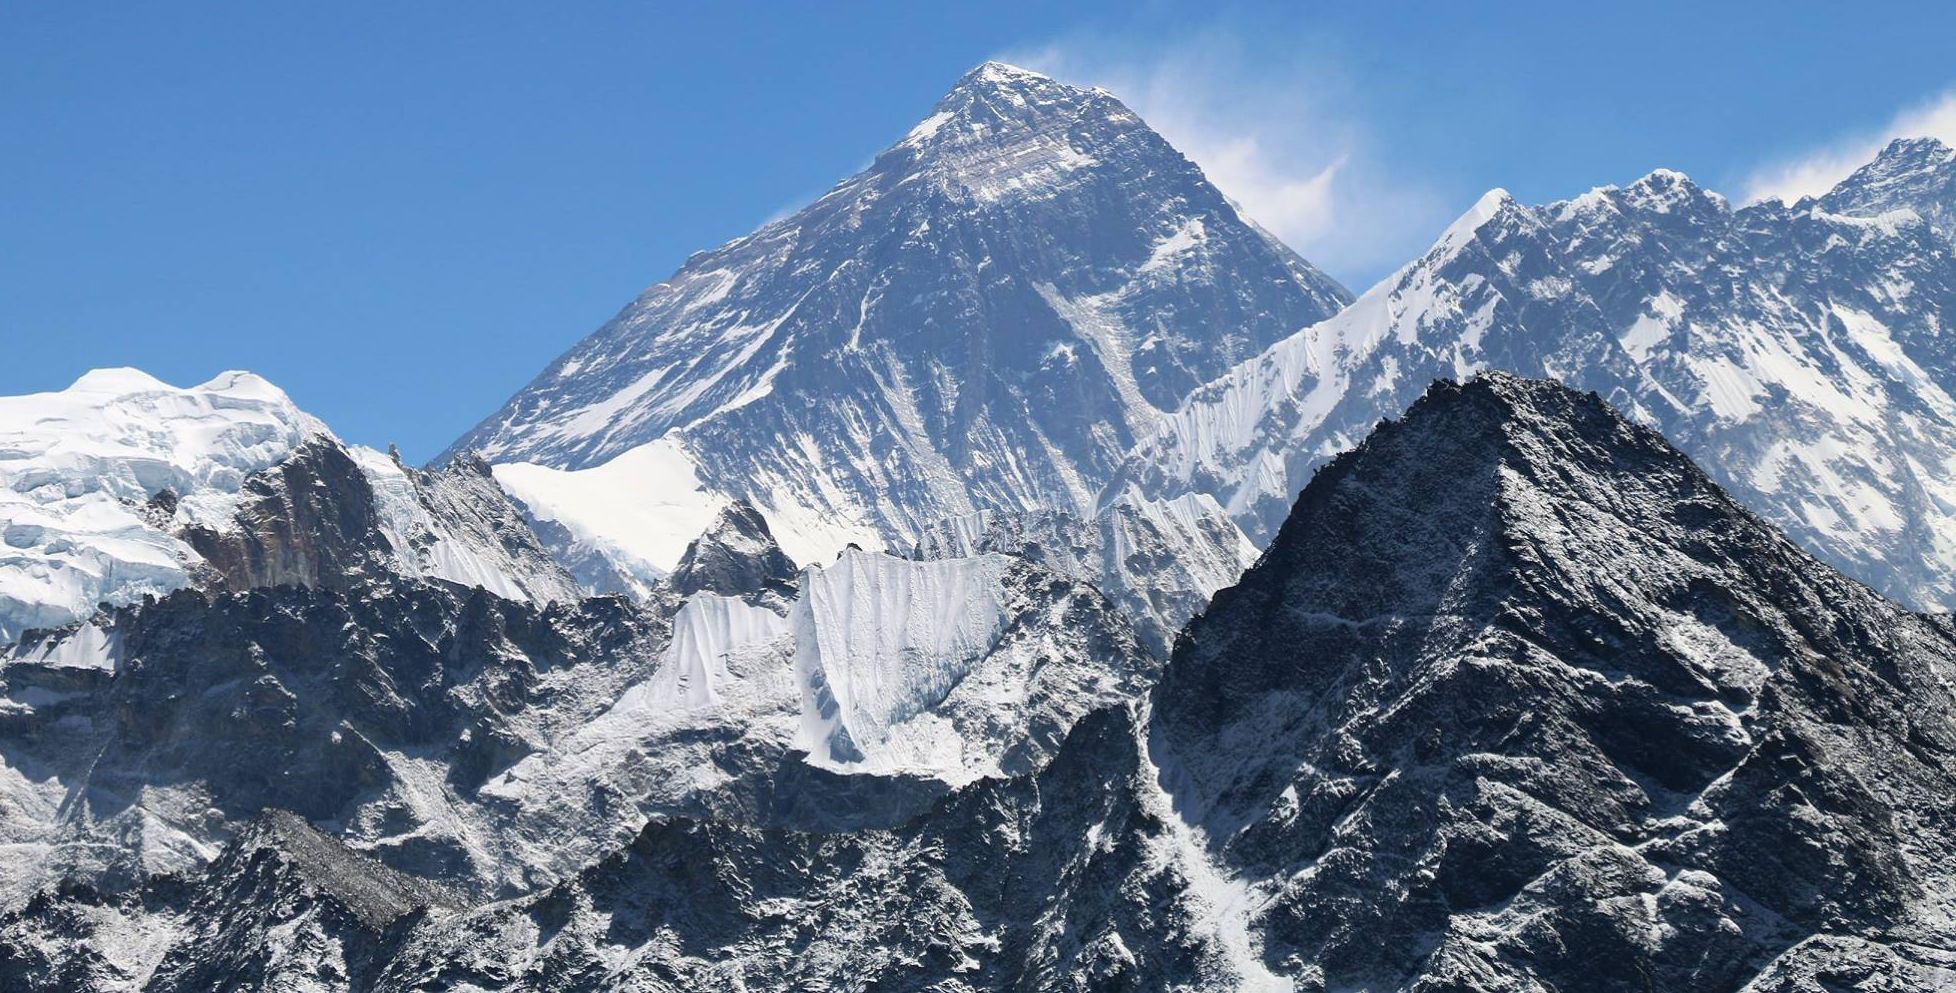 Everest from Gokyo Ri